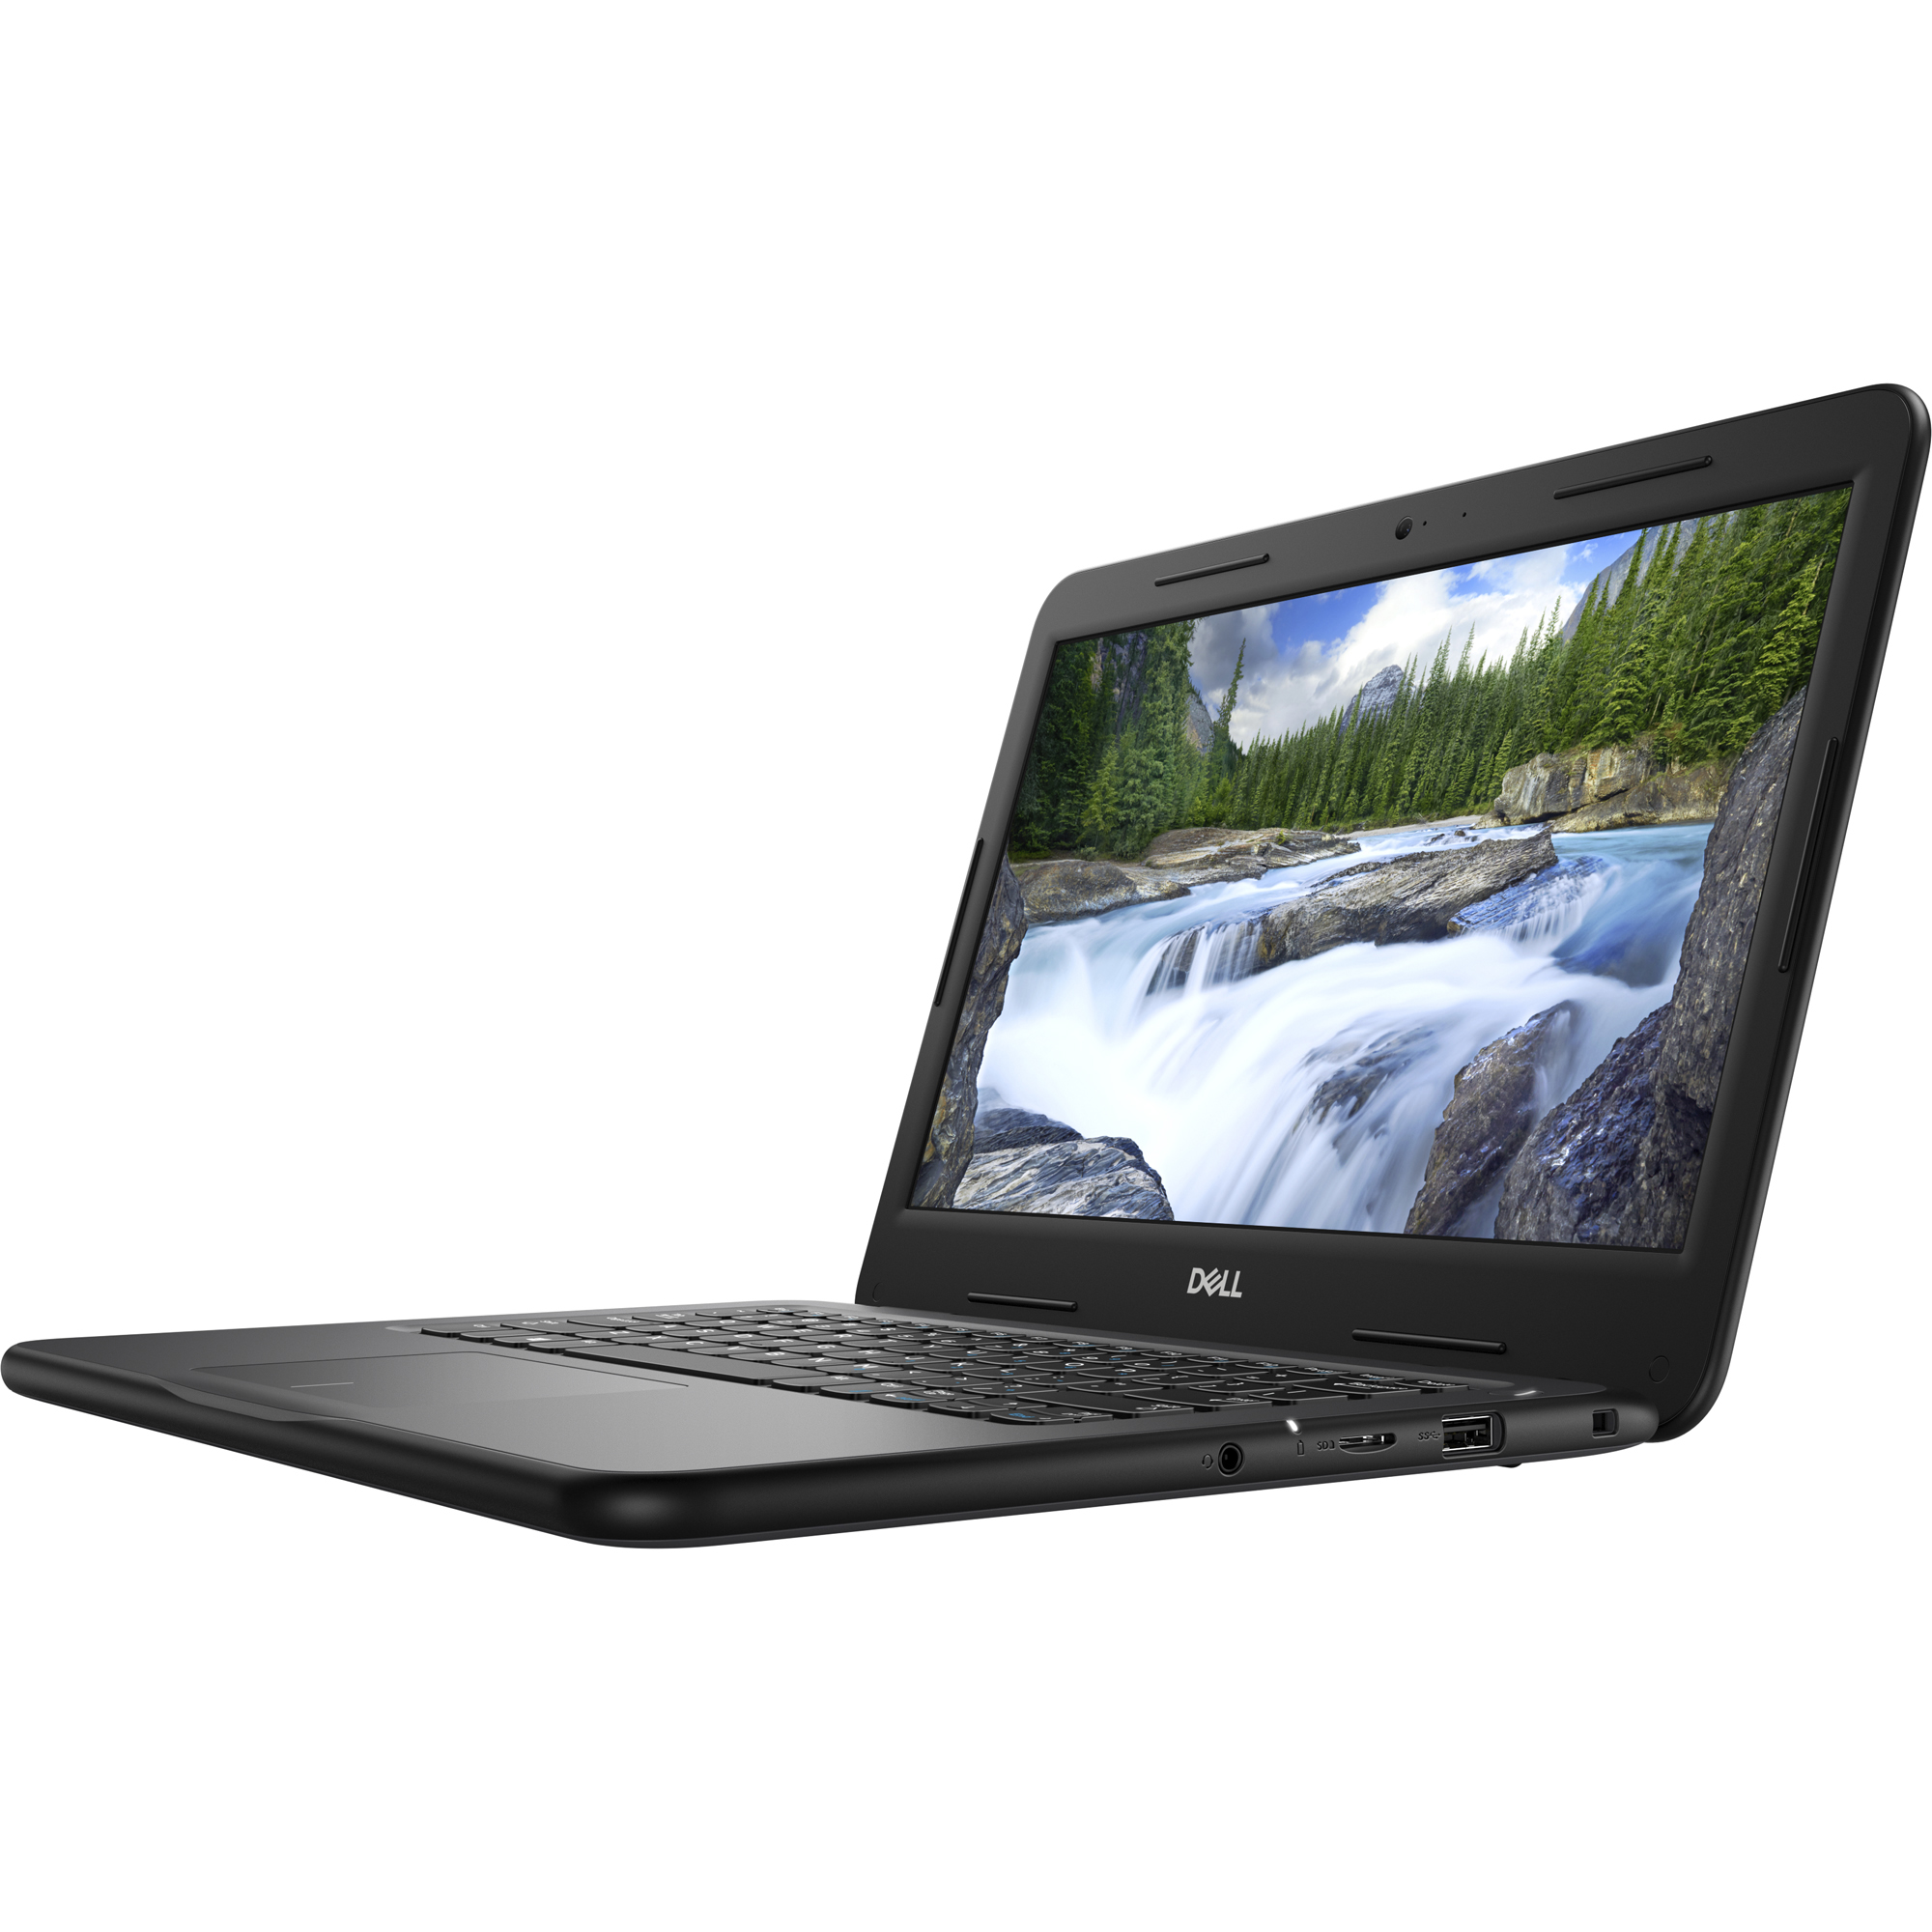 Dell Chromebook 11 3000 3100 11.6" 2 in 1 Chromebook - Intel Celeron N4020 - 8GB RAM - 32GB Flash Memory - 1366 x 768 - Intel HD Graphics - Chrome OS - Convertible - Black - image 2 of 5